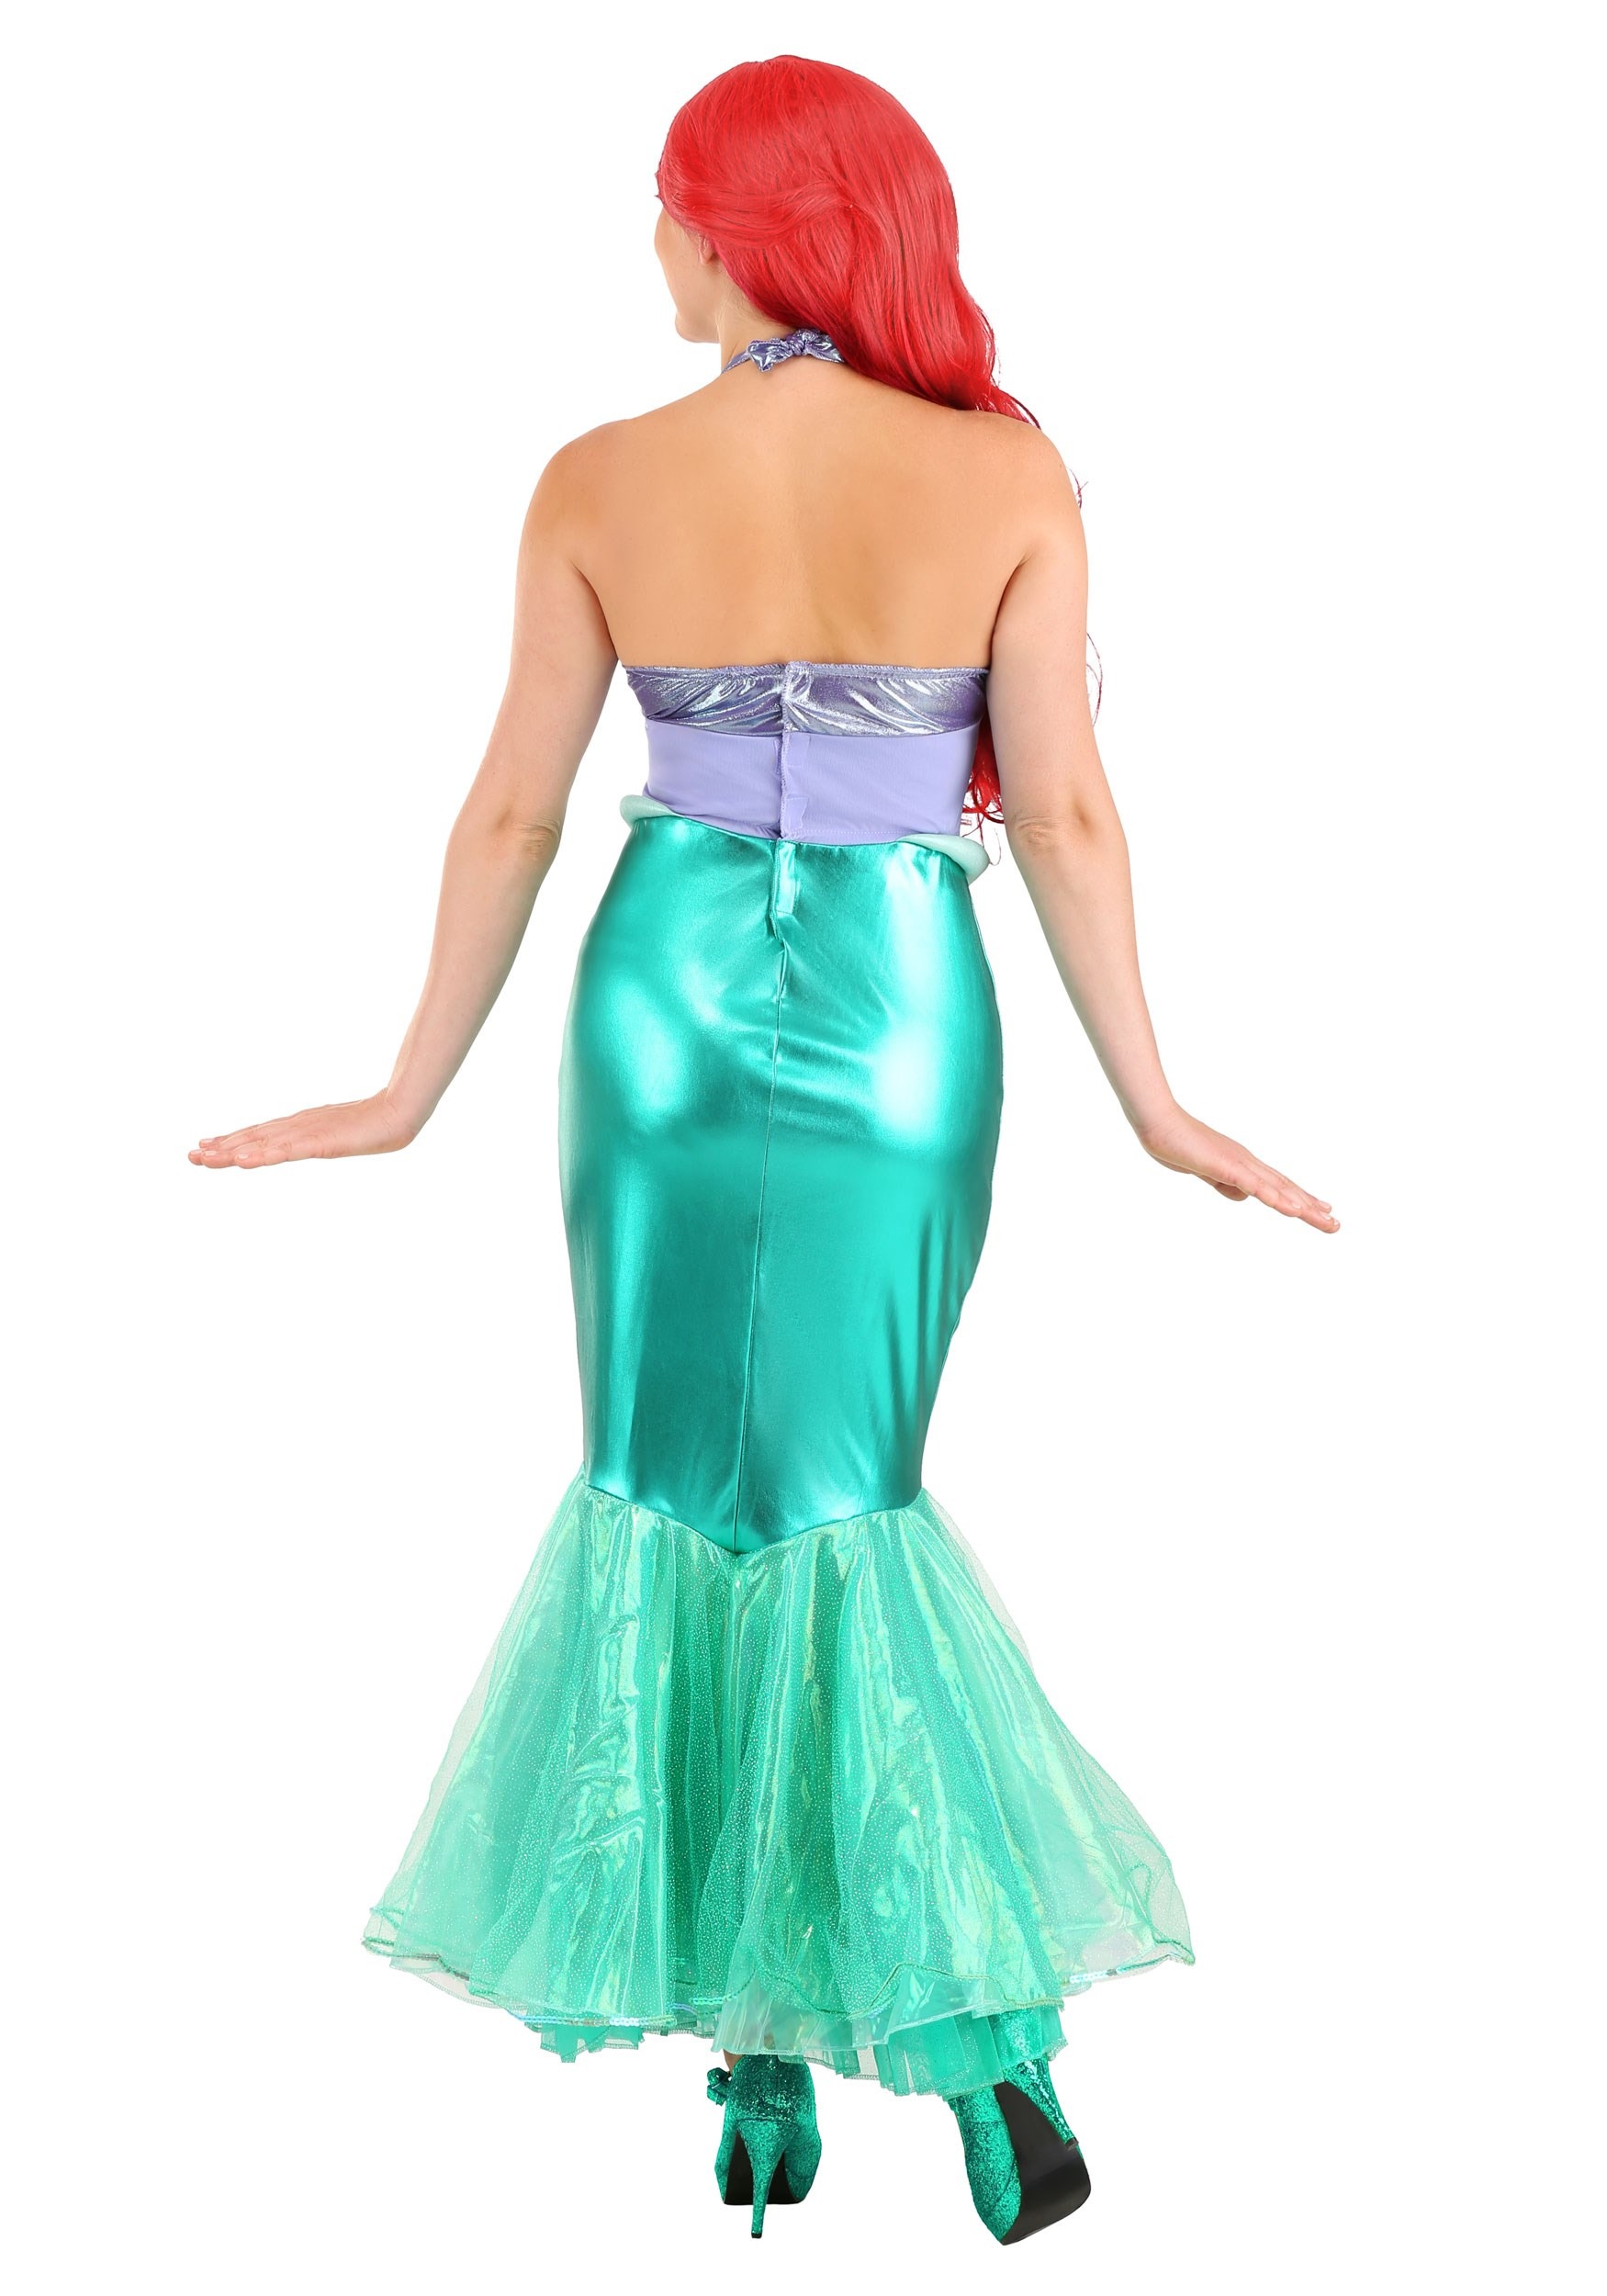 The Little Mermaid Women's Ariel Deluxe Adult CostumeDisguise 85686 